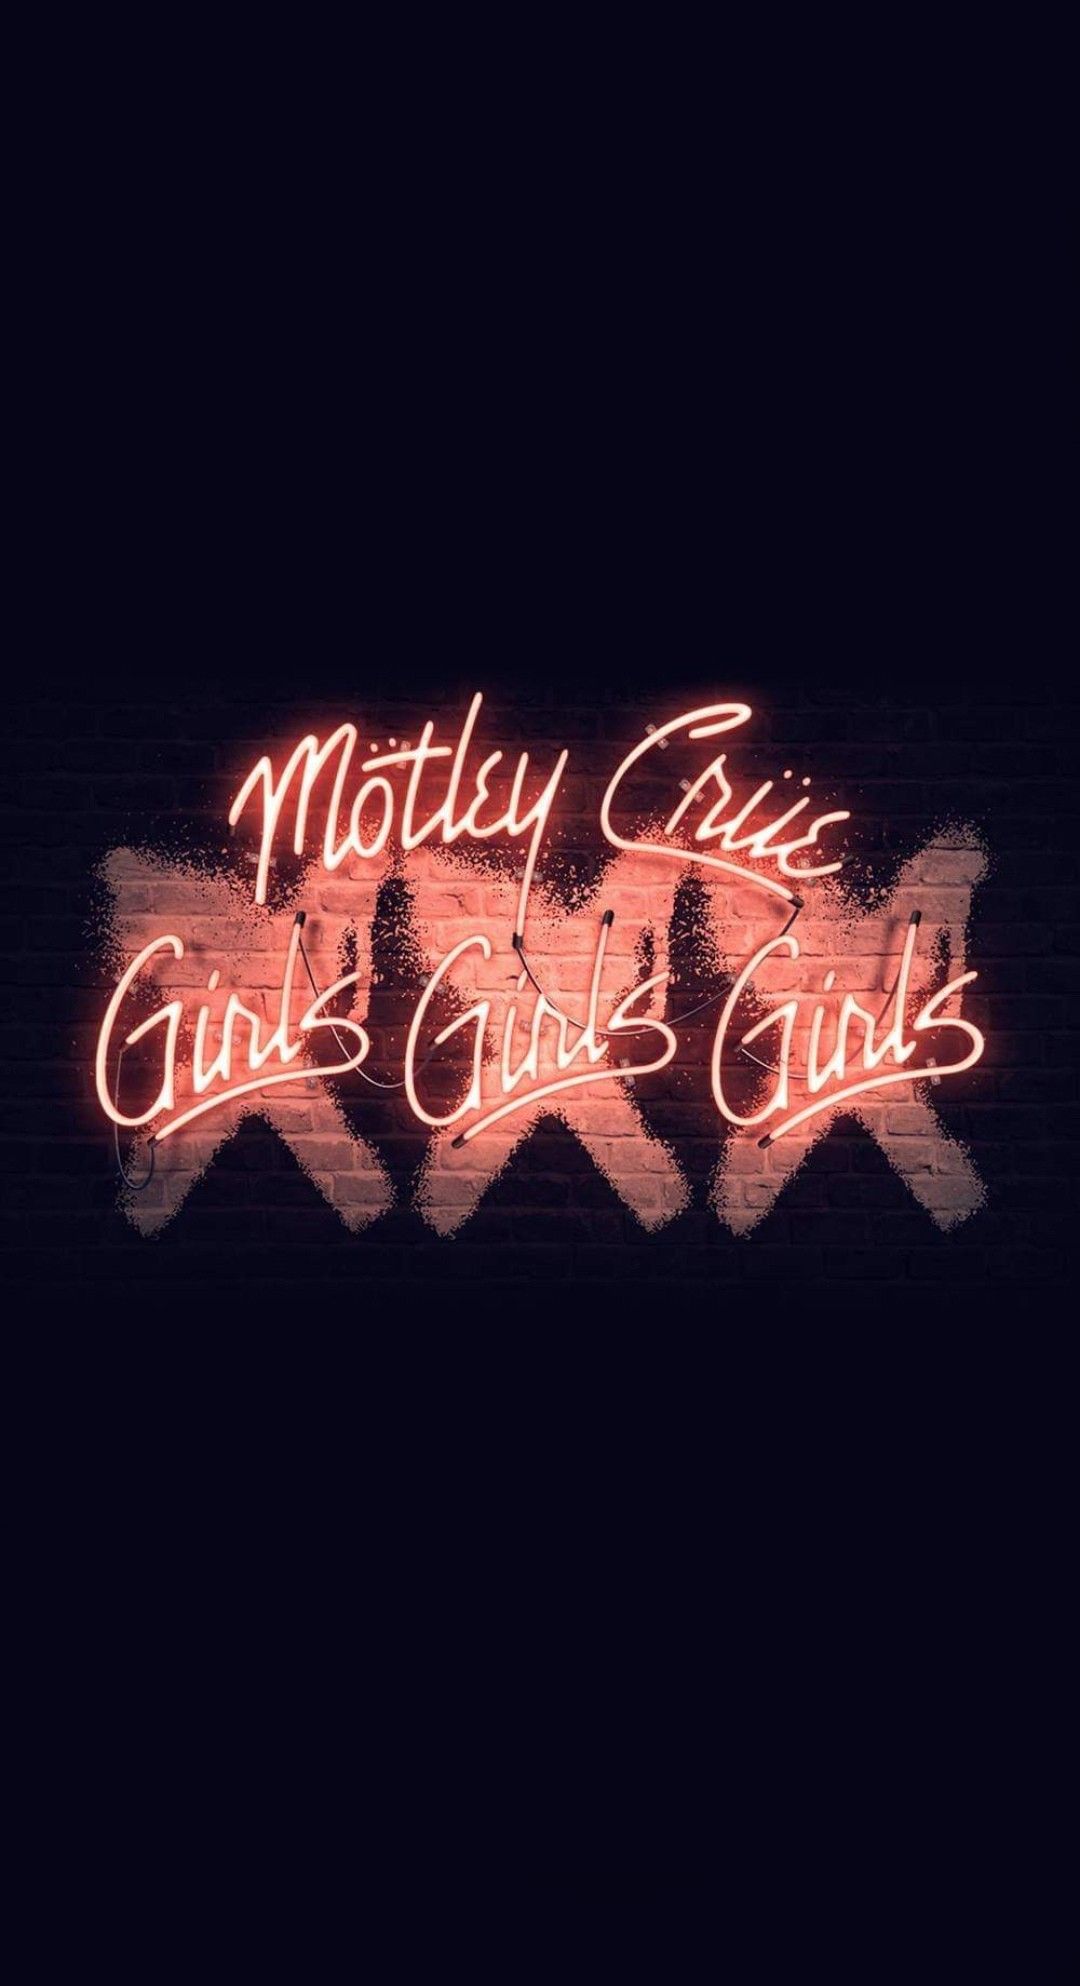 Motley Crue Girls Girls Girls 30th Anniversary - HD Wallpaper 